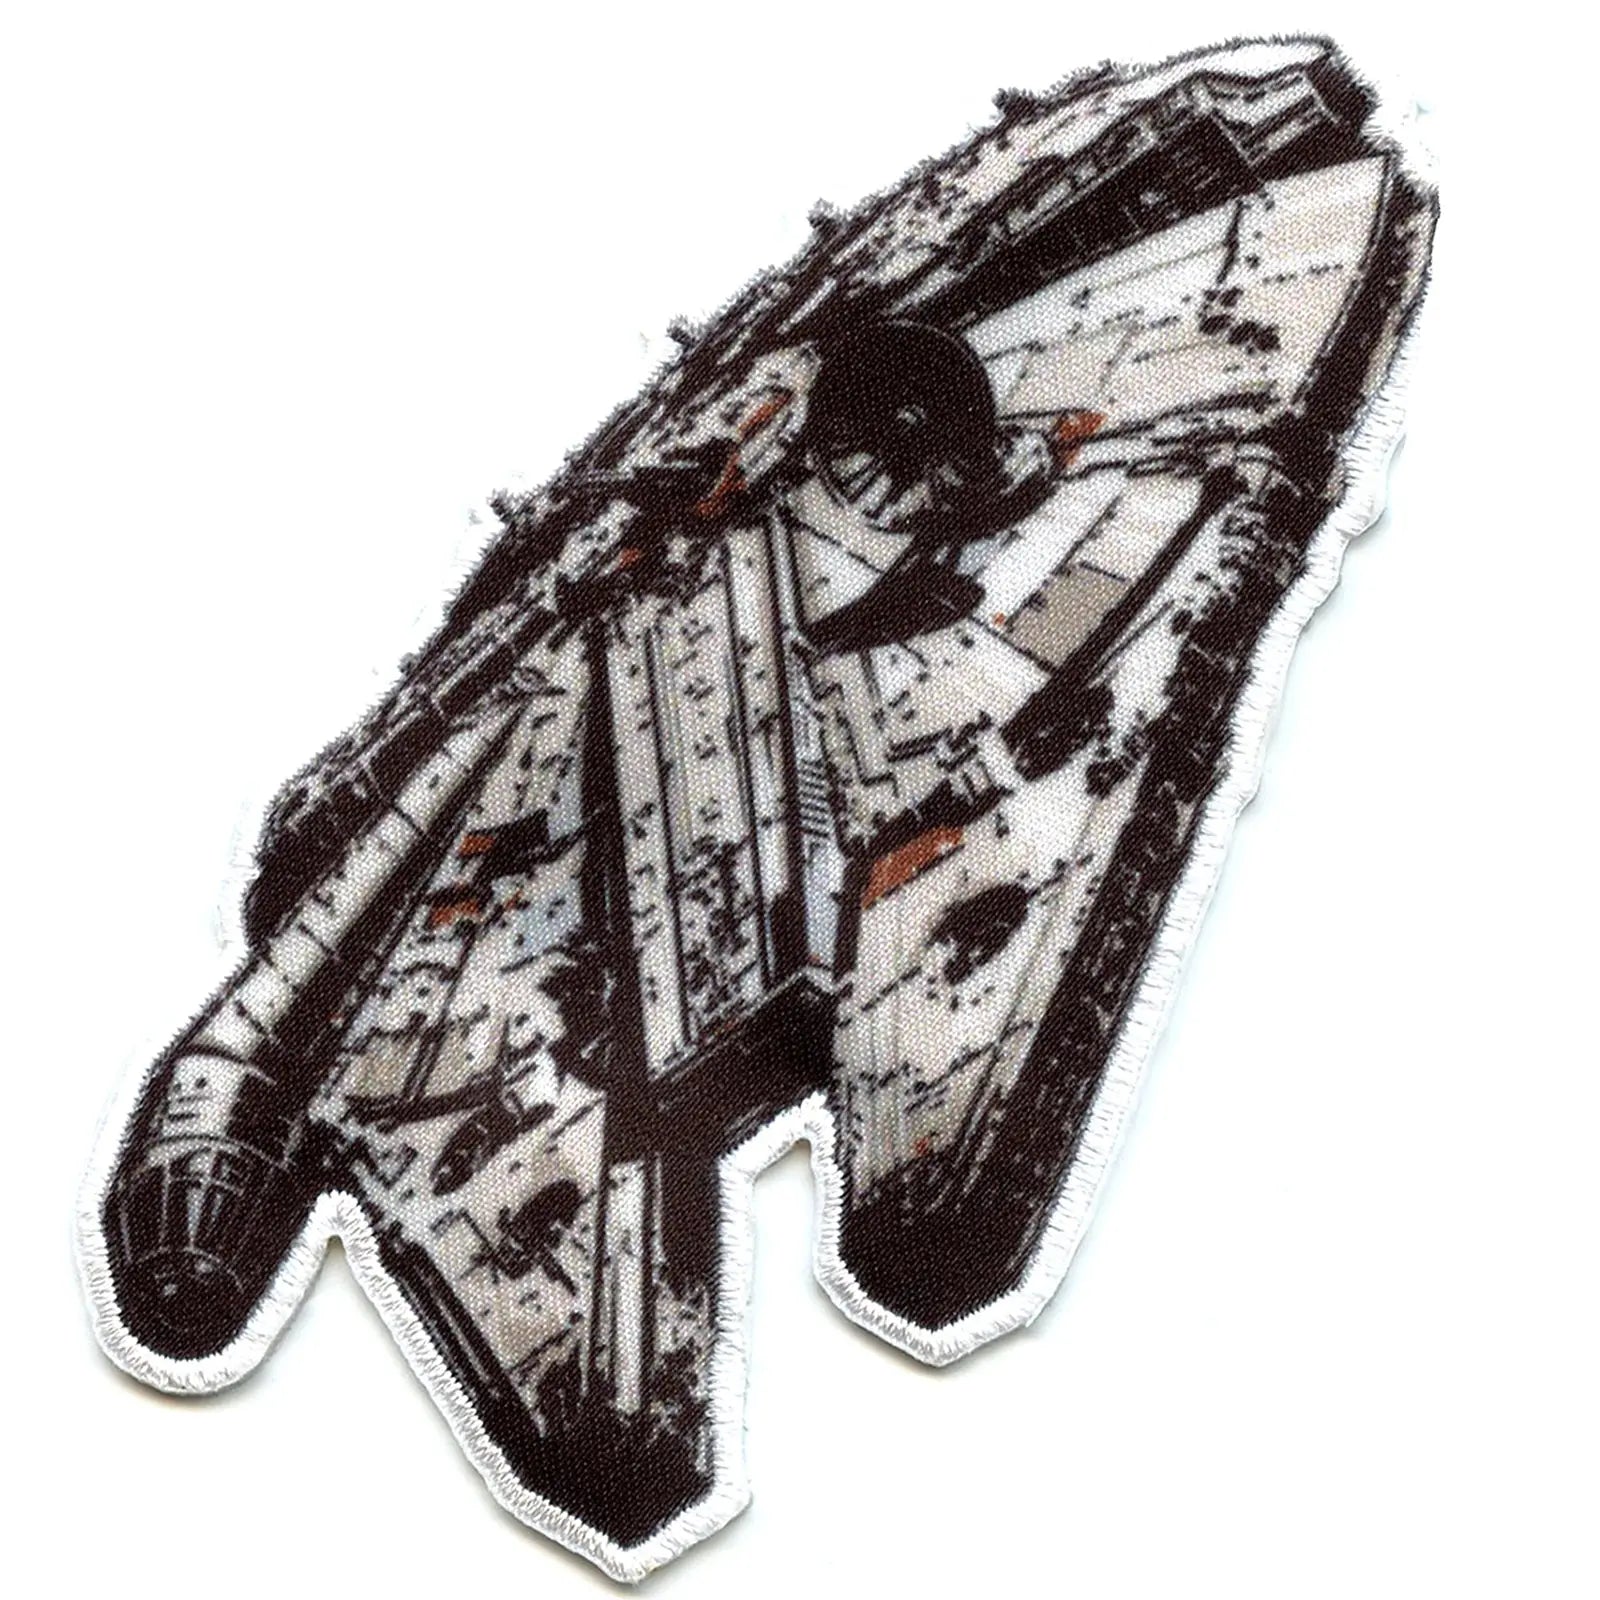 Star Wars Millennium Falcon Iron on Applique Patch 